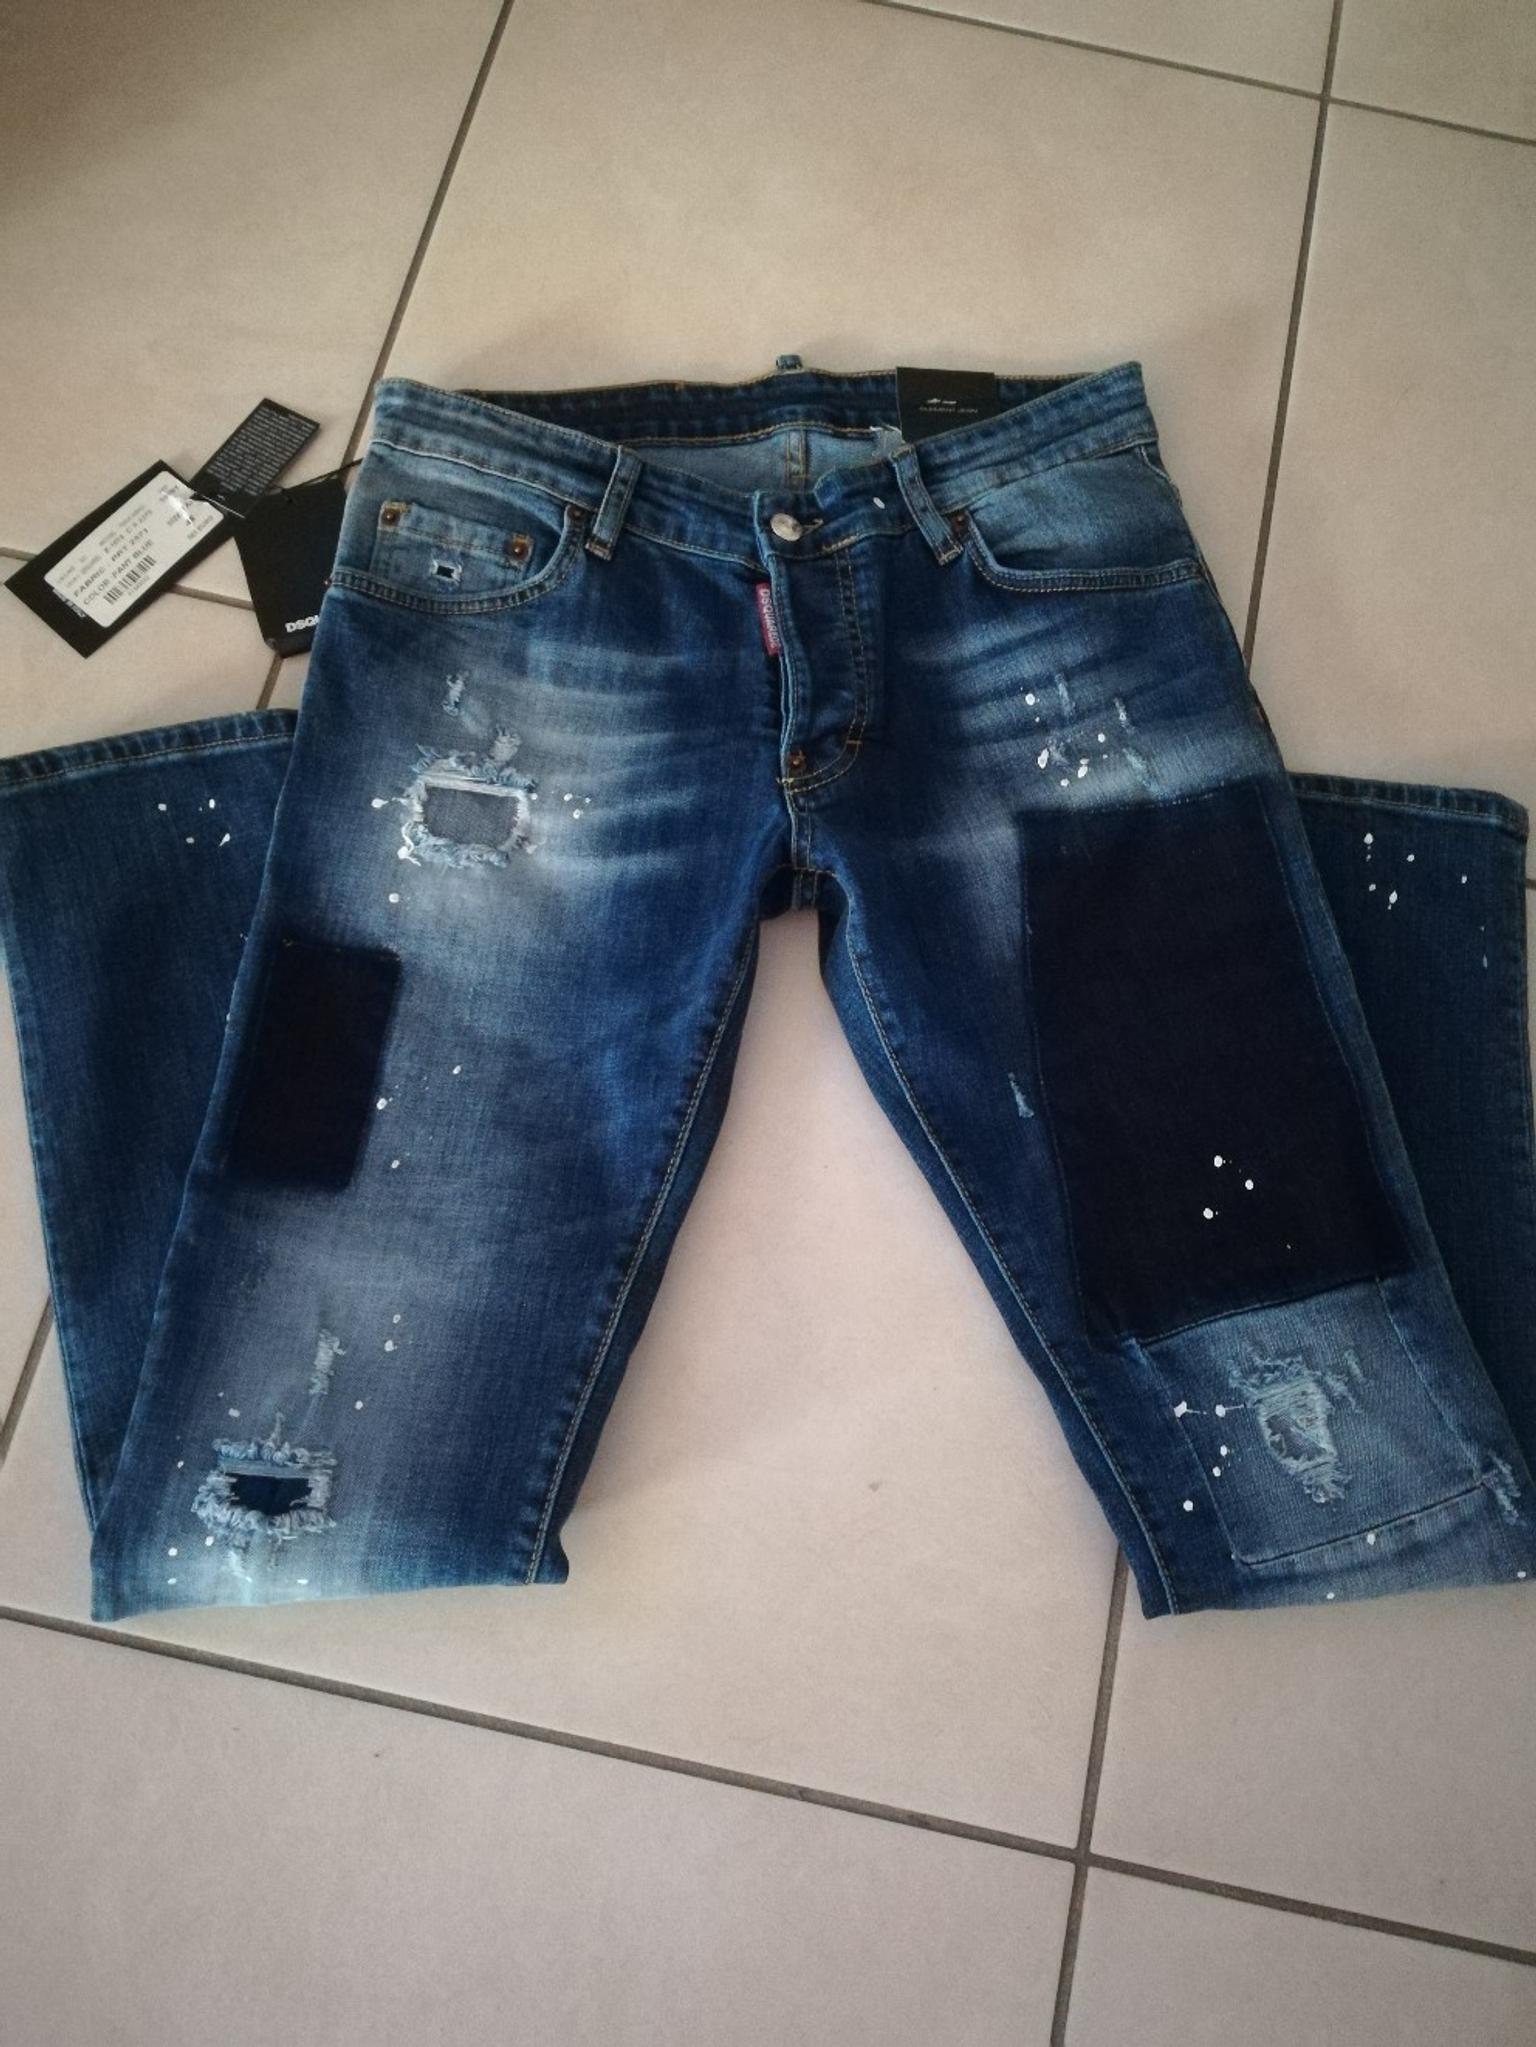 jeans dsquared originali